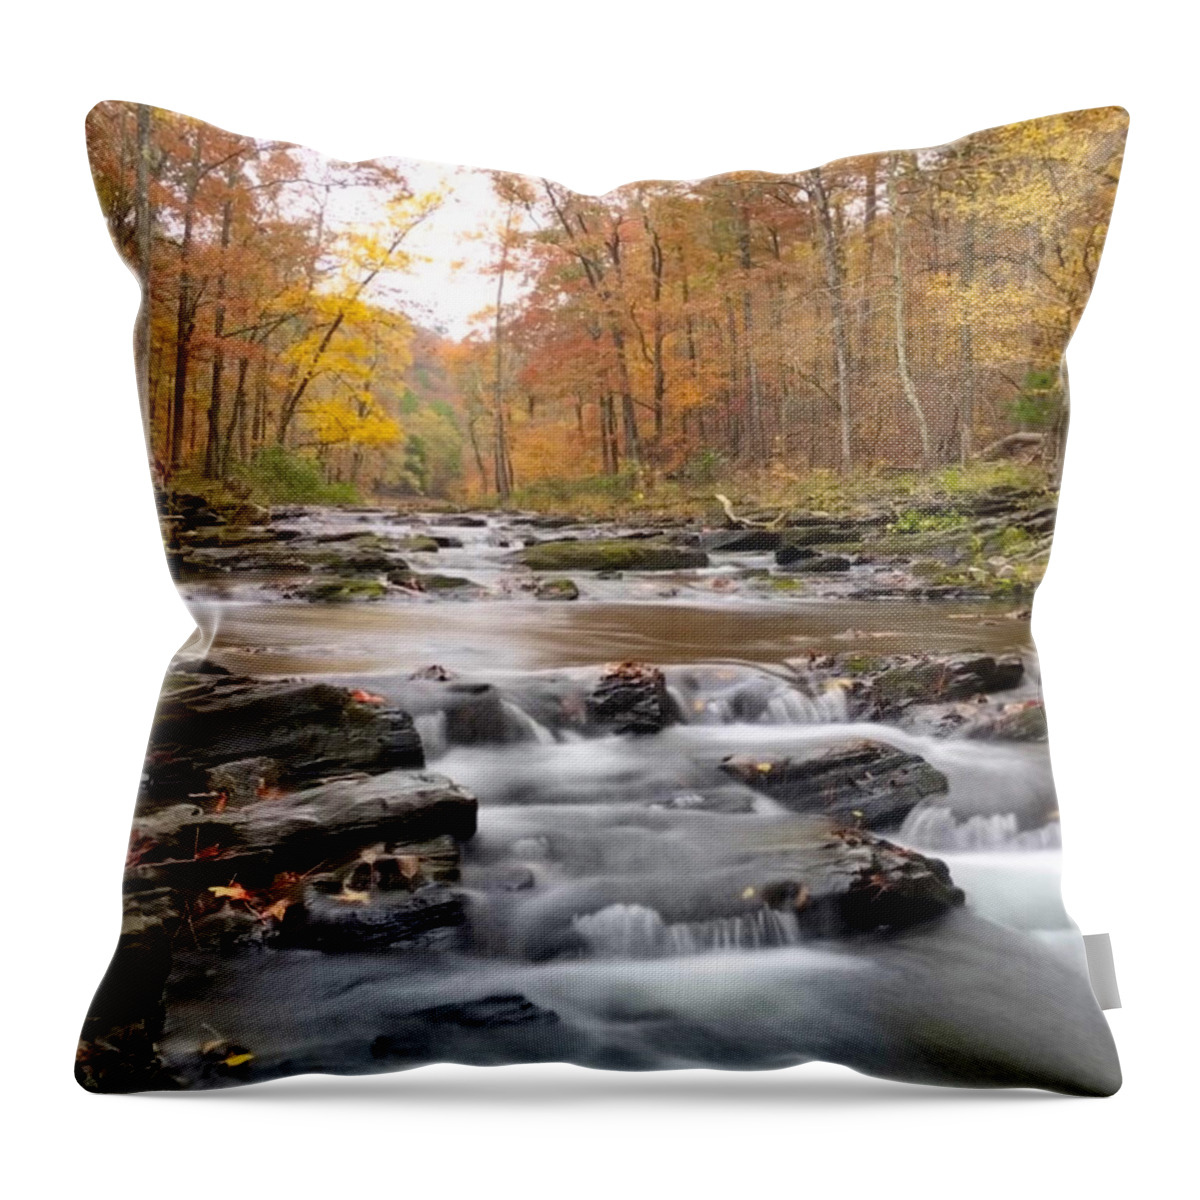 Autumn Throw Pillow featuring the photograph Autumn Wonder by Doris Aguirre